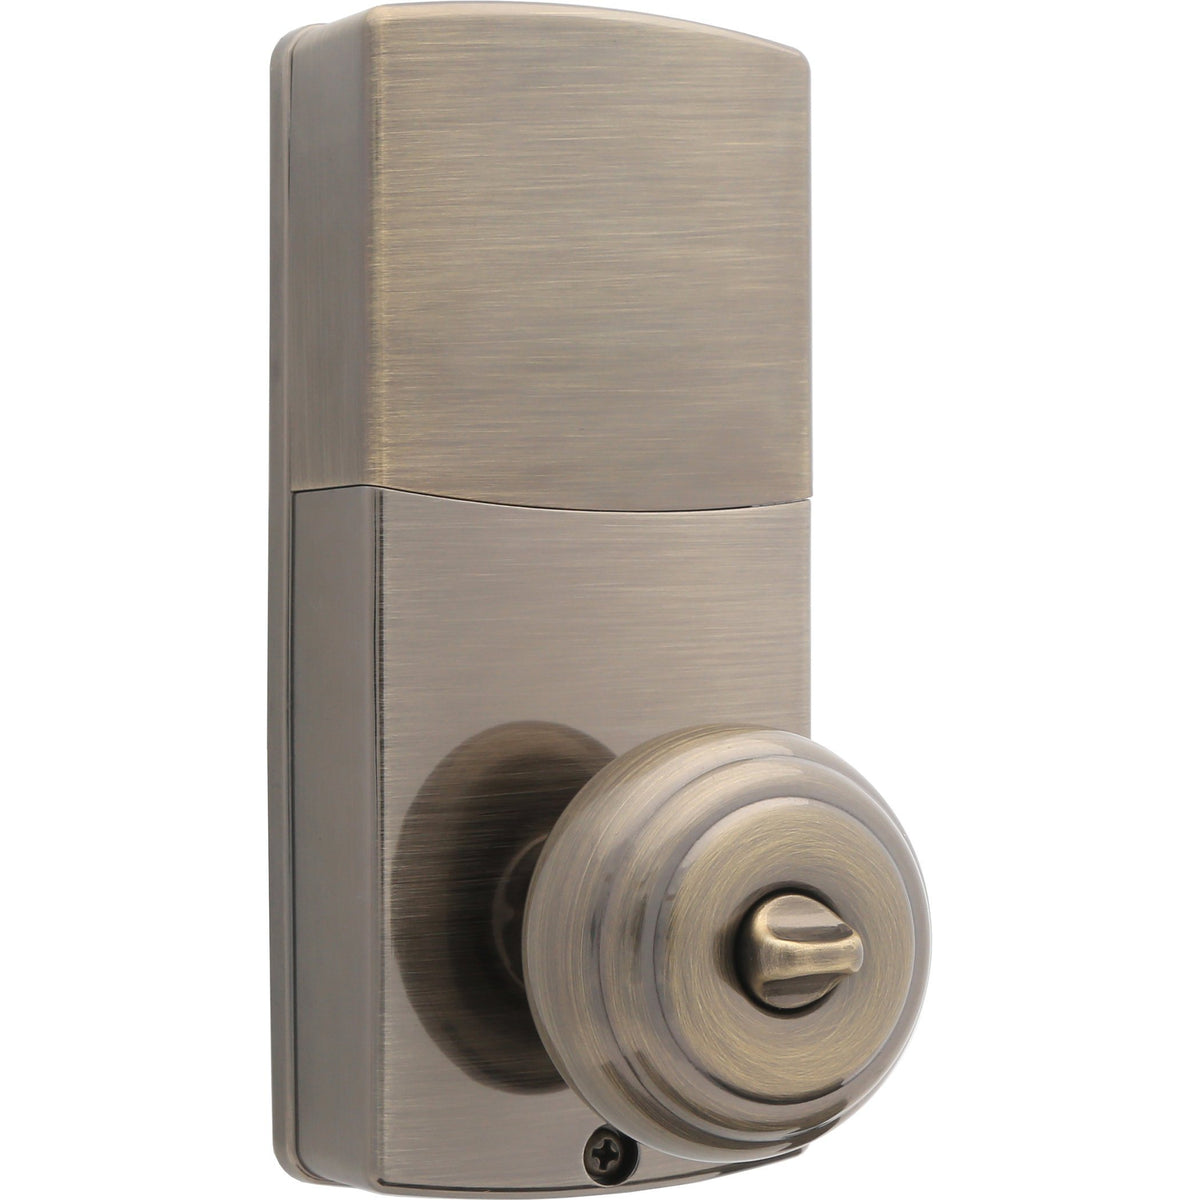 Honeywell 8732101 Electronic Entry Knob Door Lock with Keypad Antique Brass Finish Backside